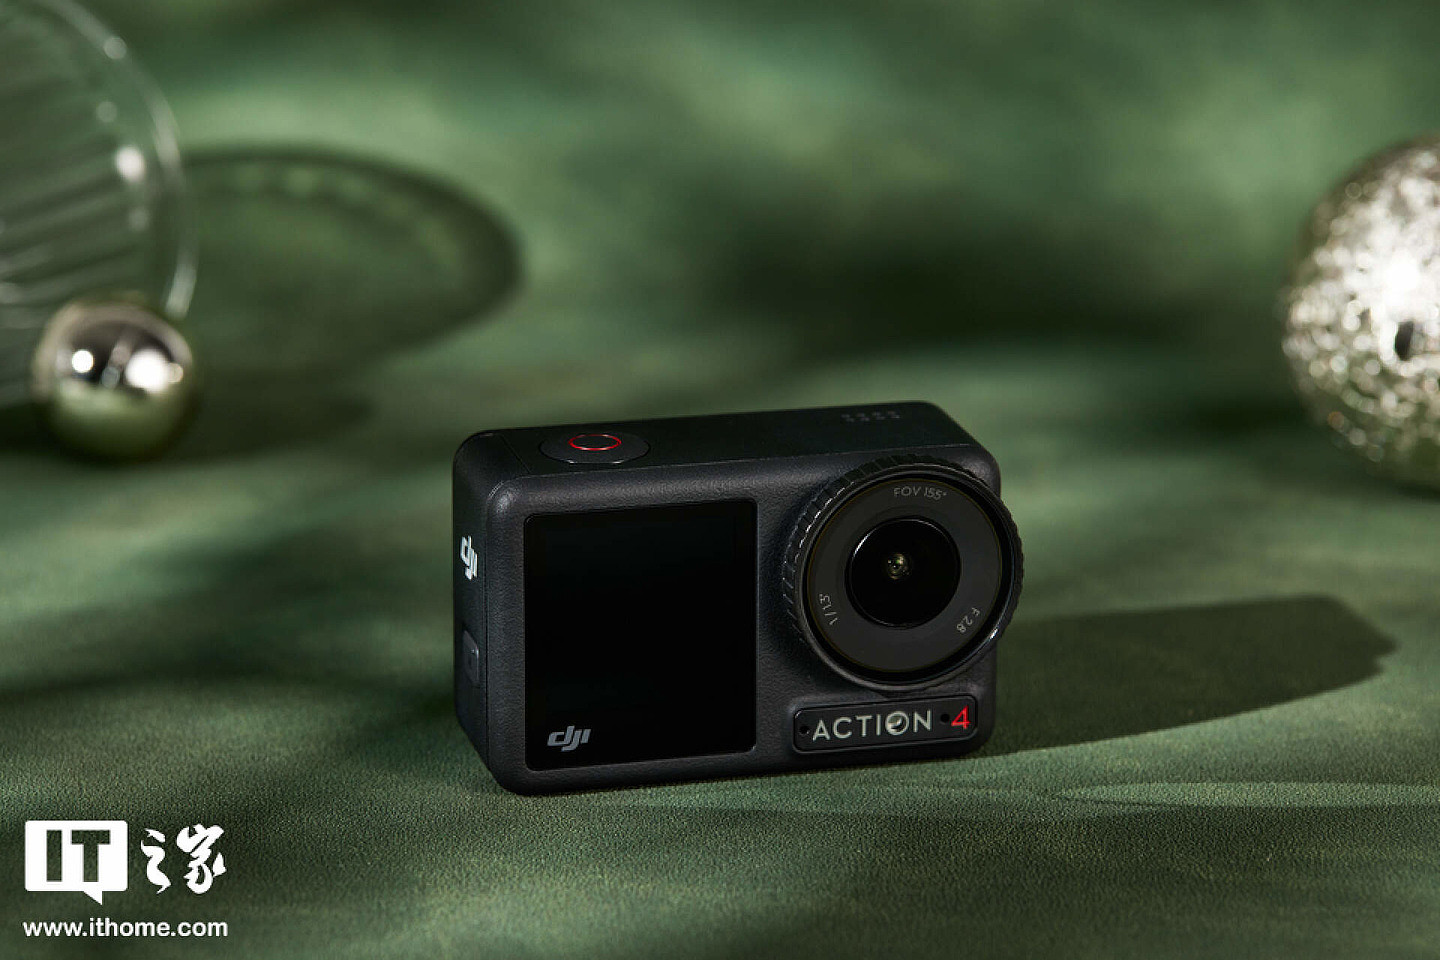 【IT之家评测室】大疆 DJI OSMO ACTION 4 运动相机体验：交互依旧优秀，画质更进一步 - 6